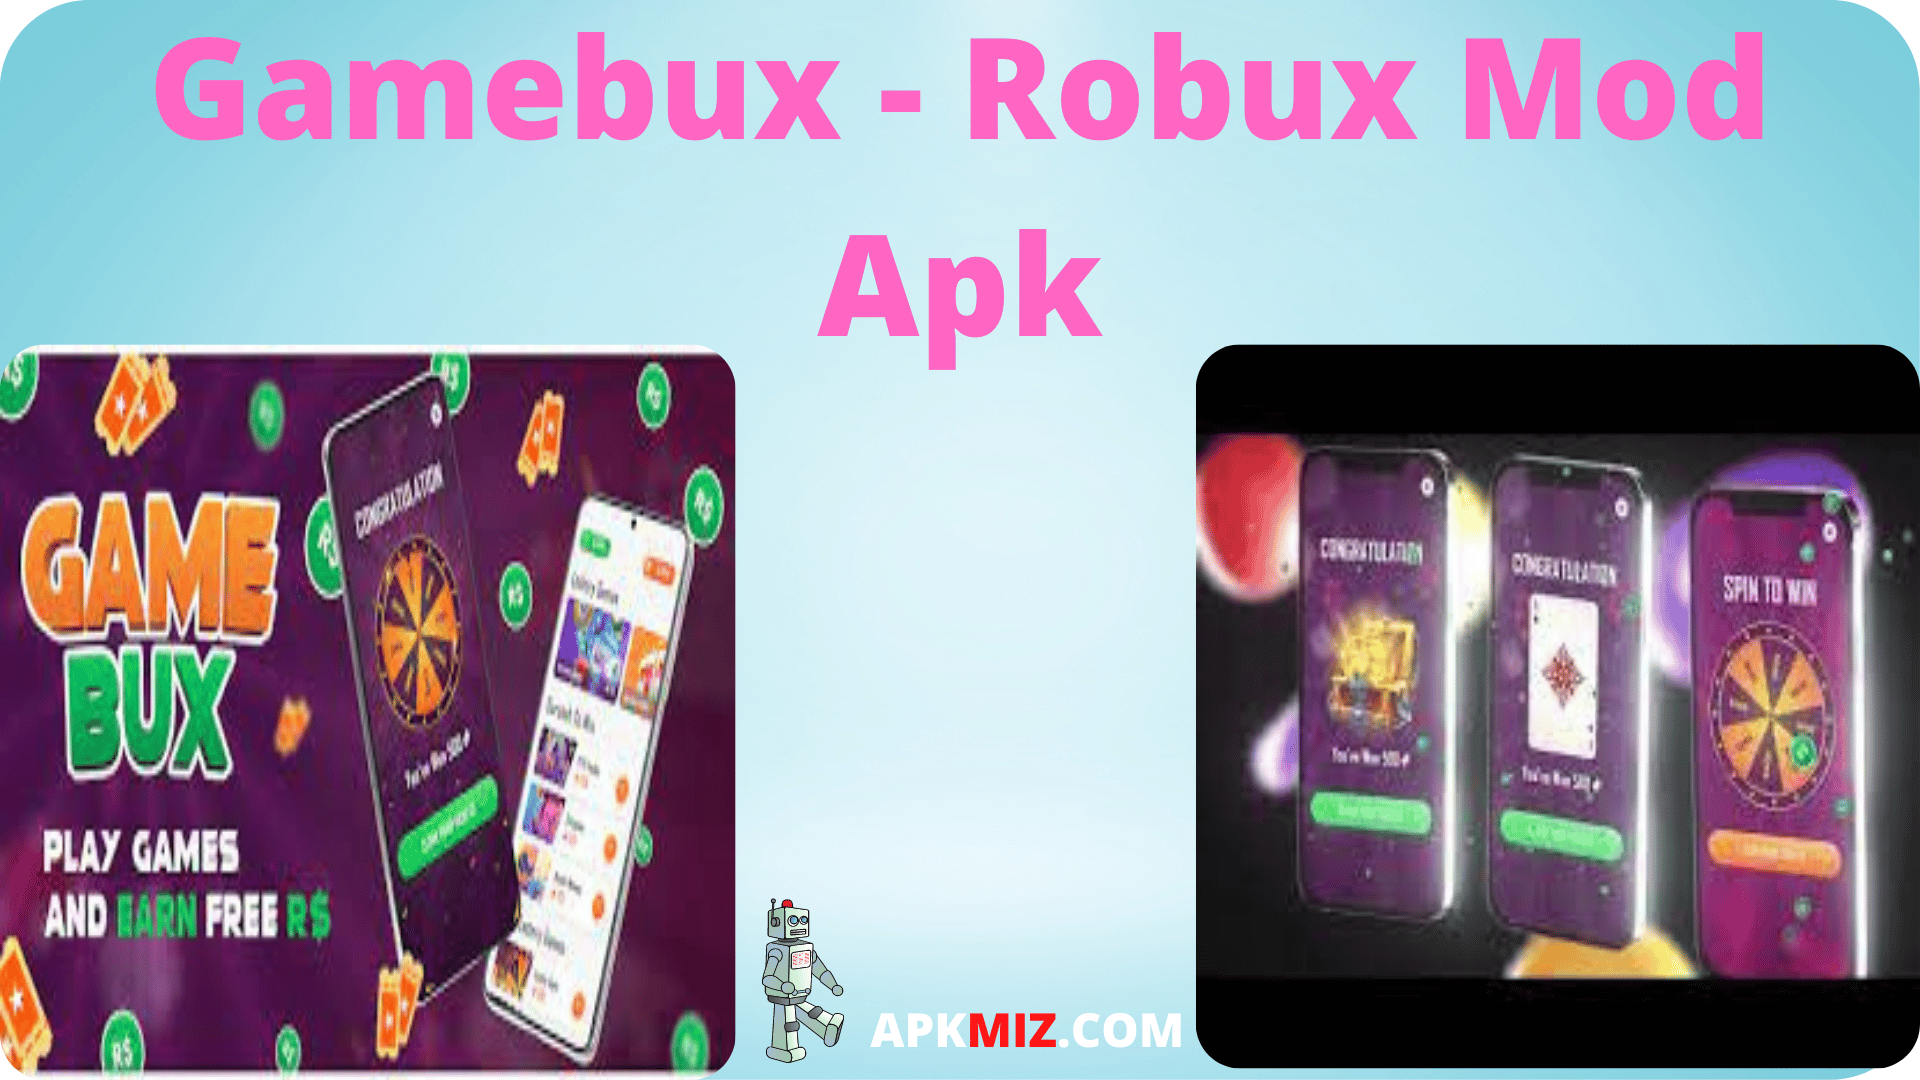 Gamebux - Robux Mod Apk